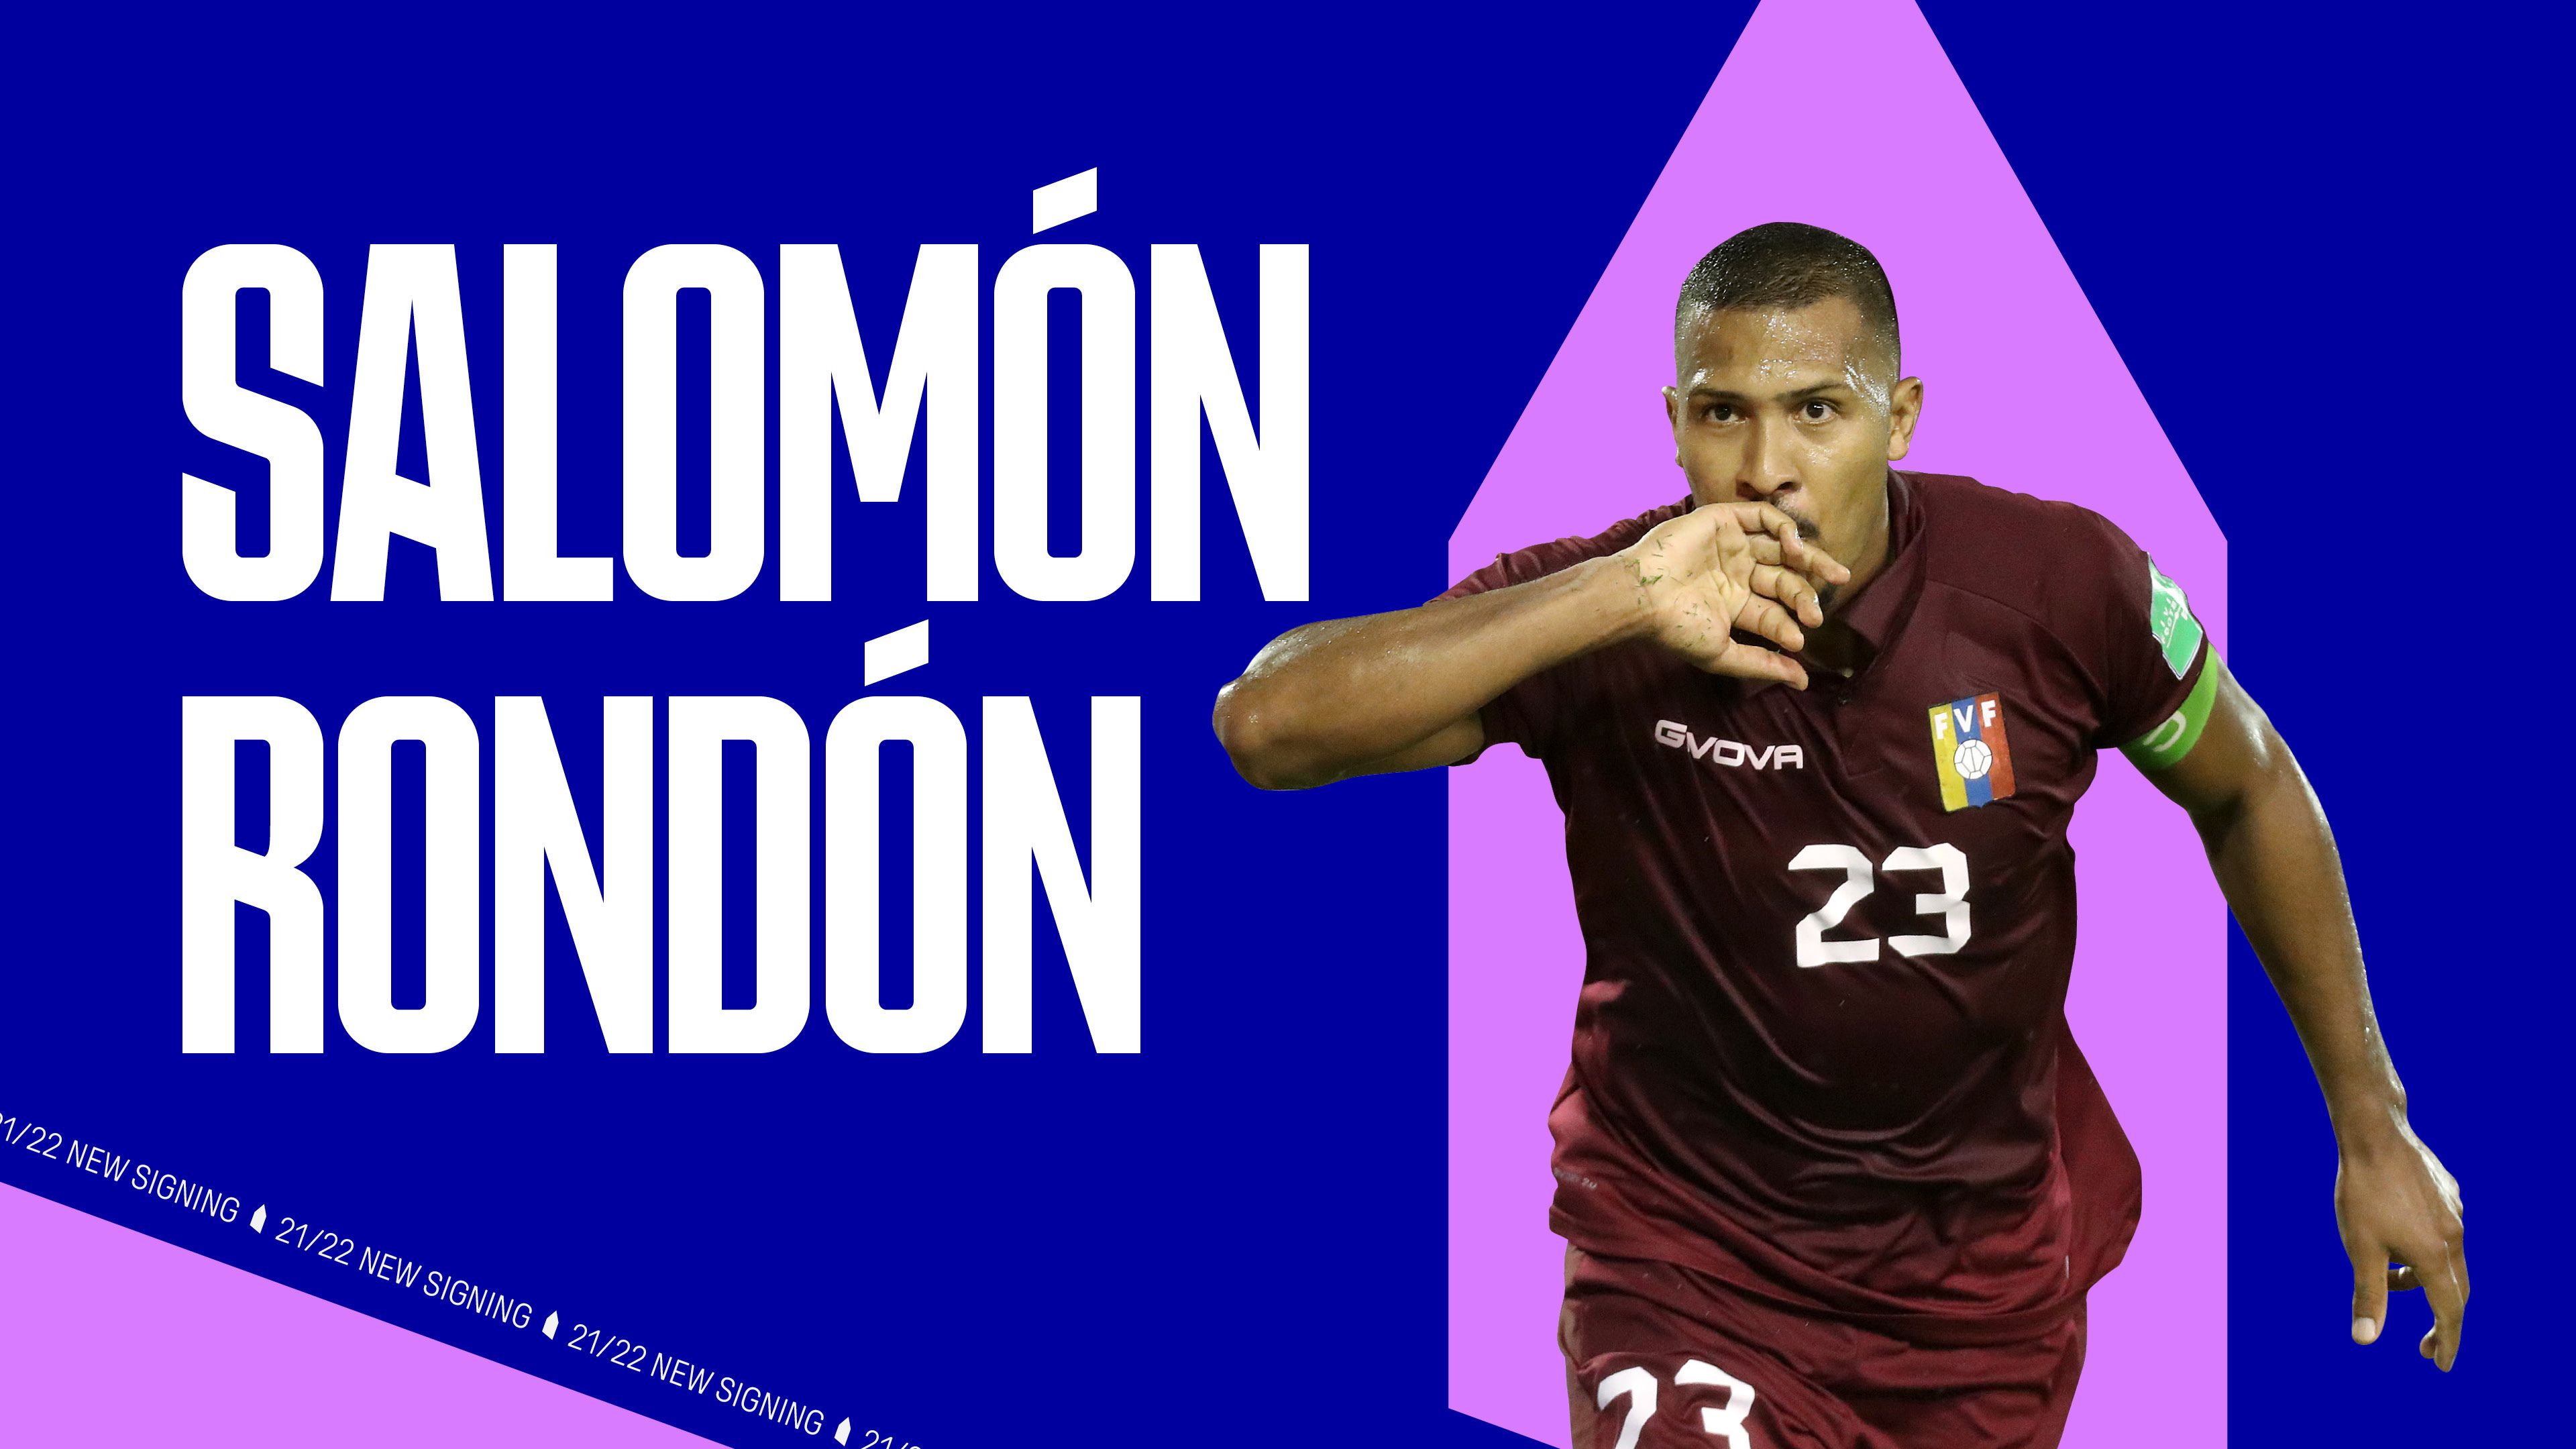 New-Signings-Salomon-Rondon-16.9-.jpg